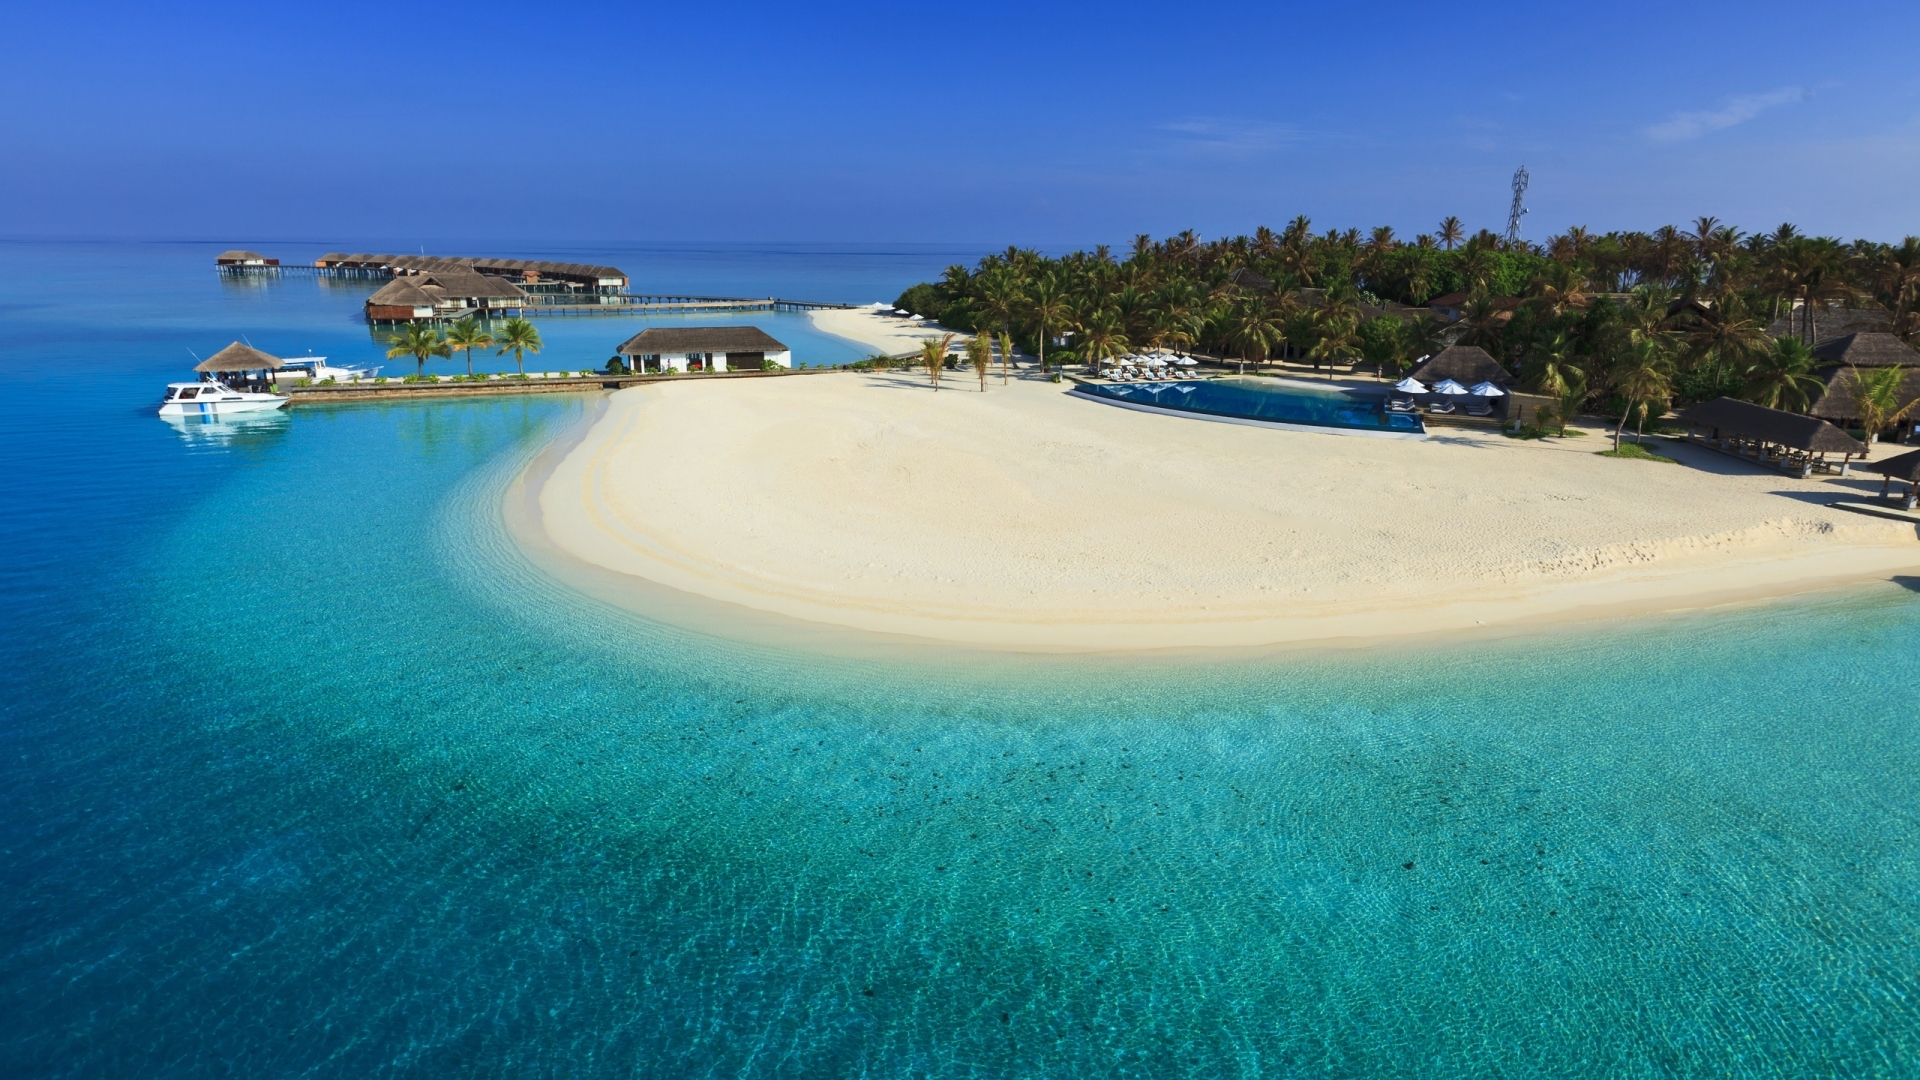 Maldives Luxury Resort for 1920 x 1080 HDTV 1080p resolution